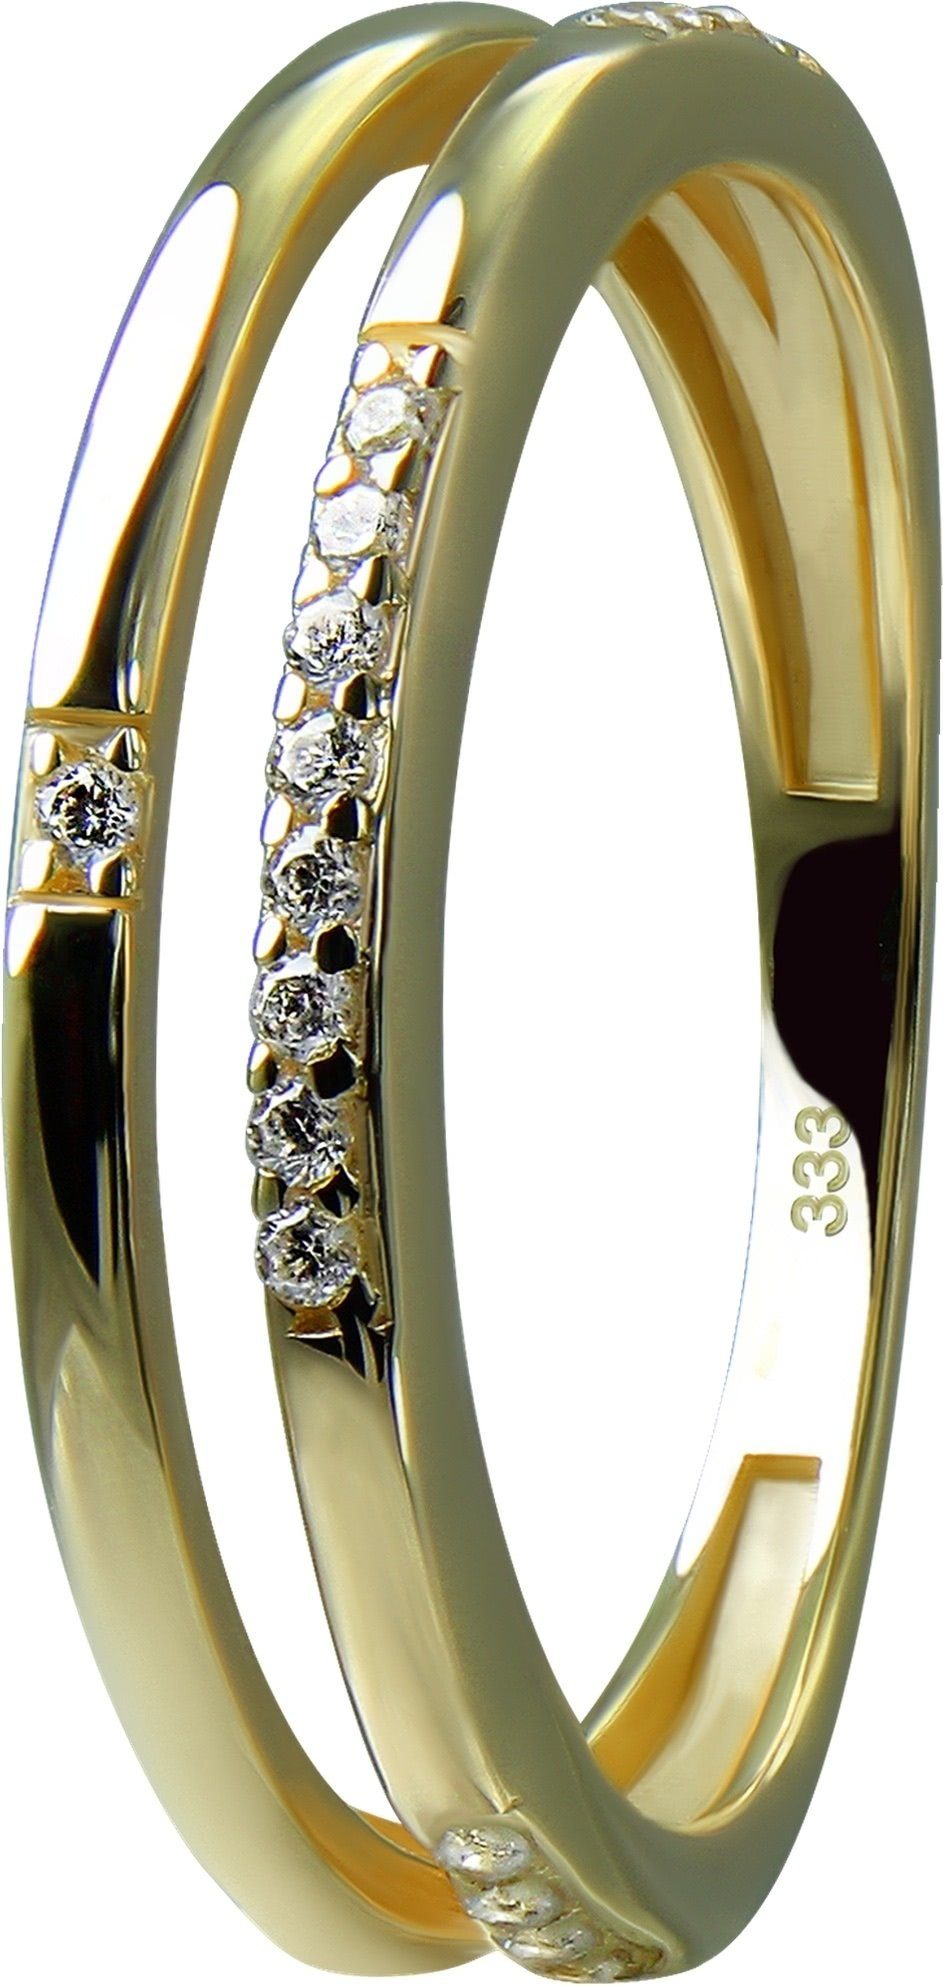 GoldDream Goldring GoldDream Gold Ring Double Gr.56 (Fingerring), Damen Ring Double 333 Gelbgold - 8 Karat, Farbe: gold, weiß